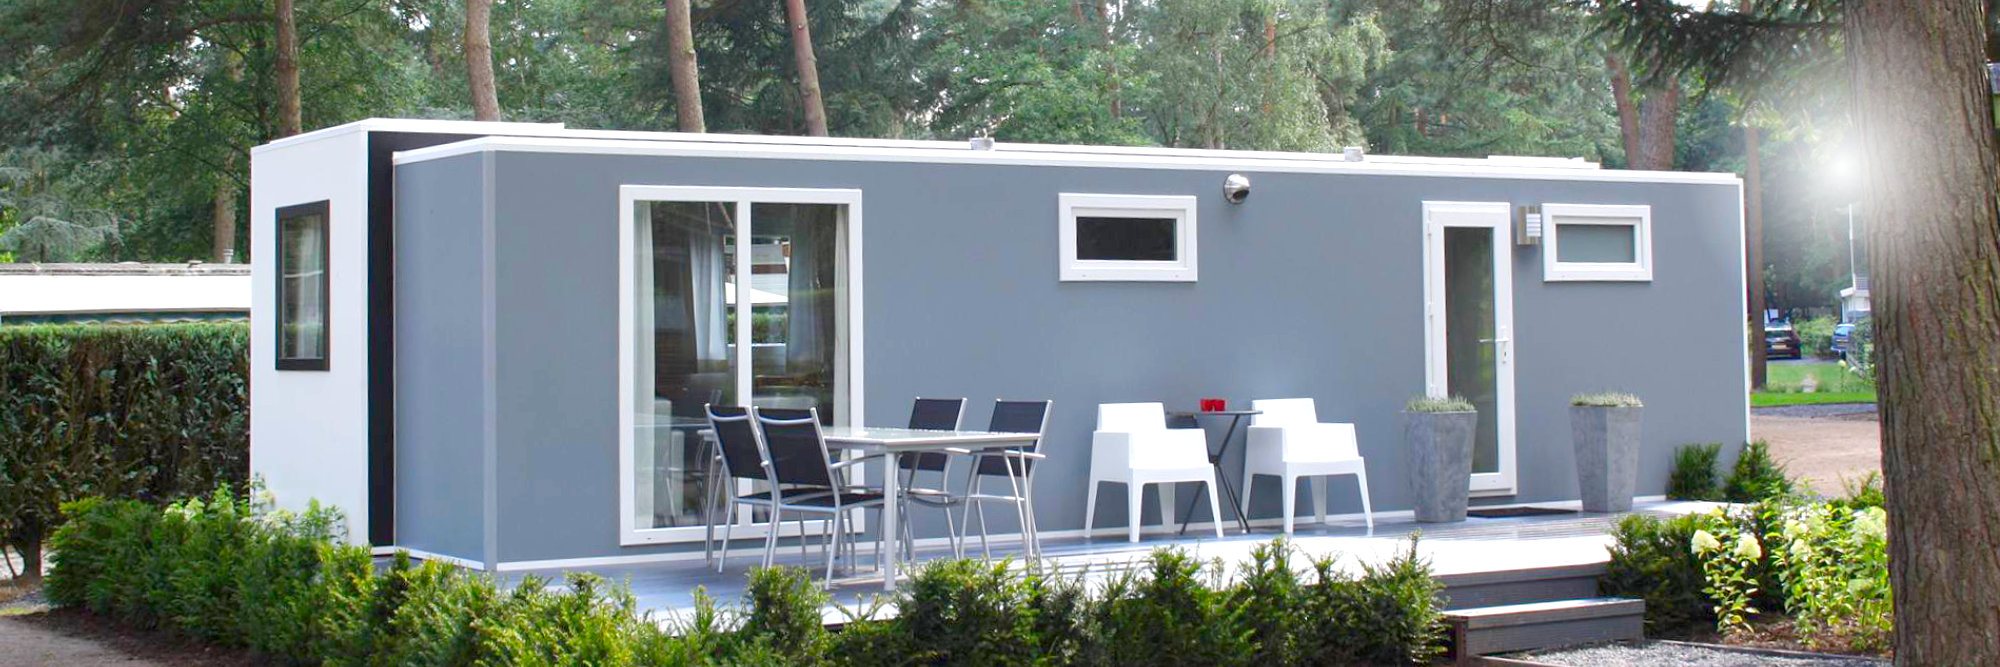 Decopan Modular Sunseeker Homes rekreasyon evleri Hollanda